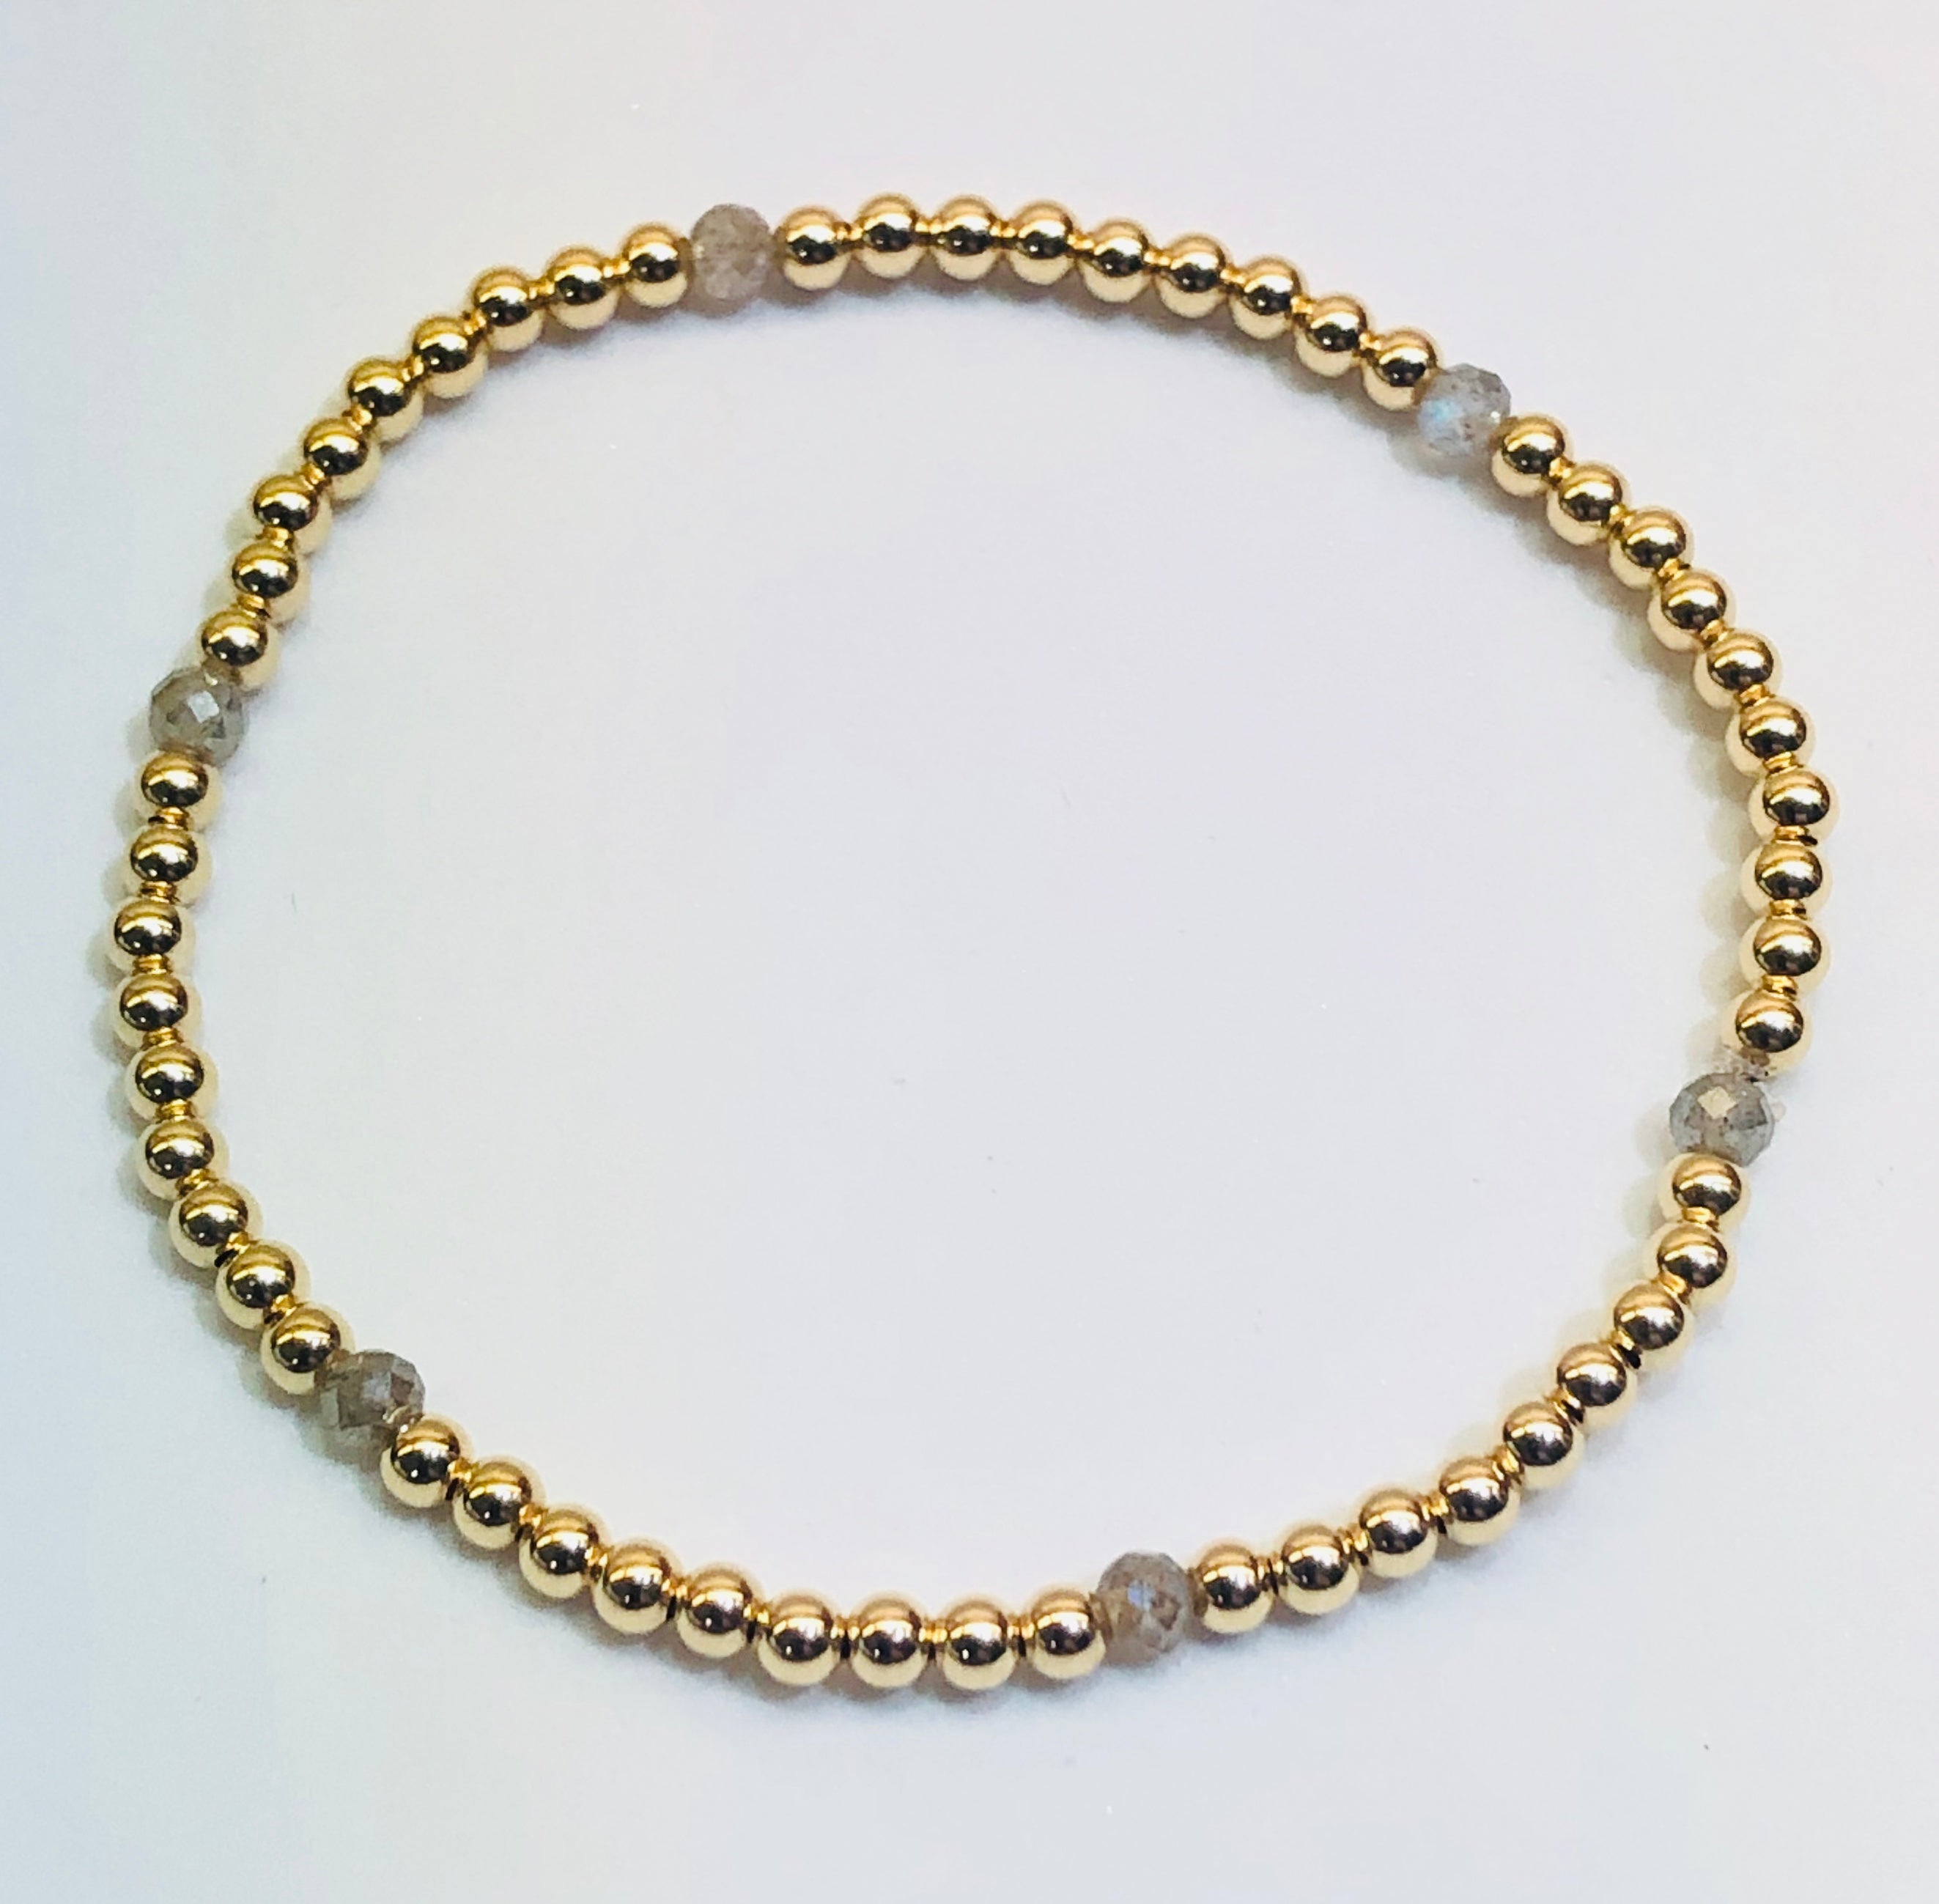 3mm 14kt Gold Filled Bead Bracelet with 6 3mm Labradorite Beads